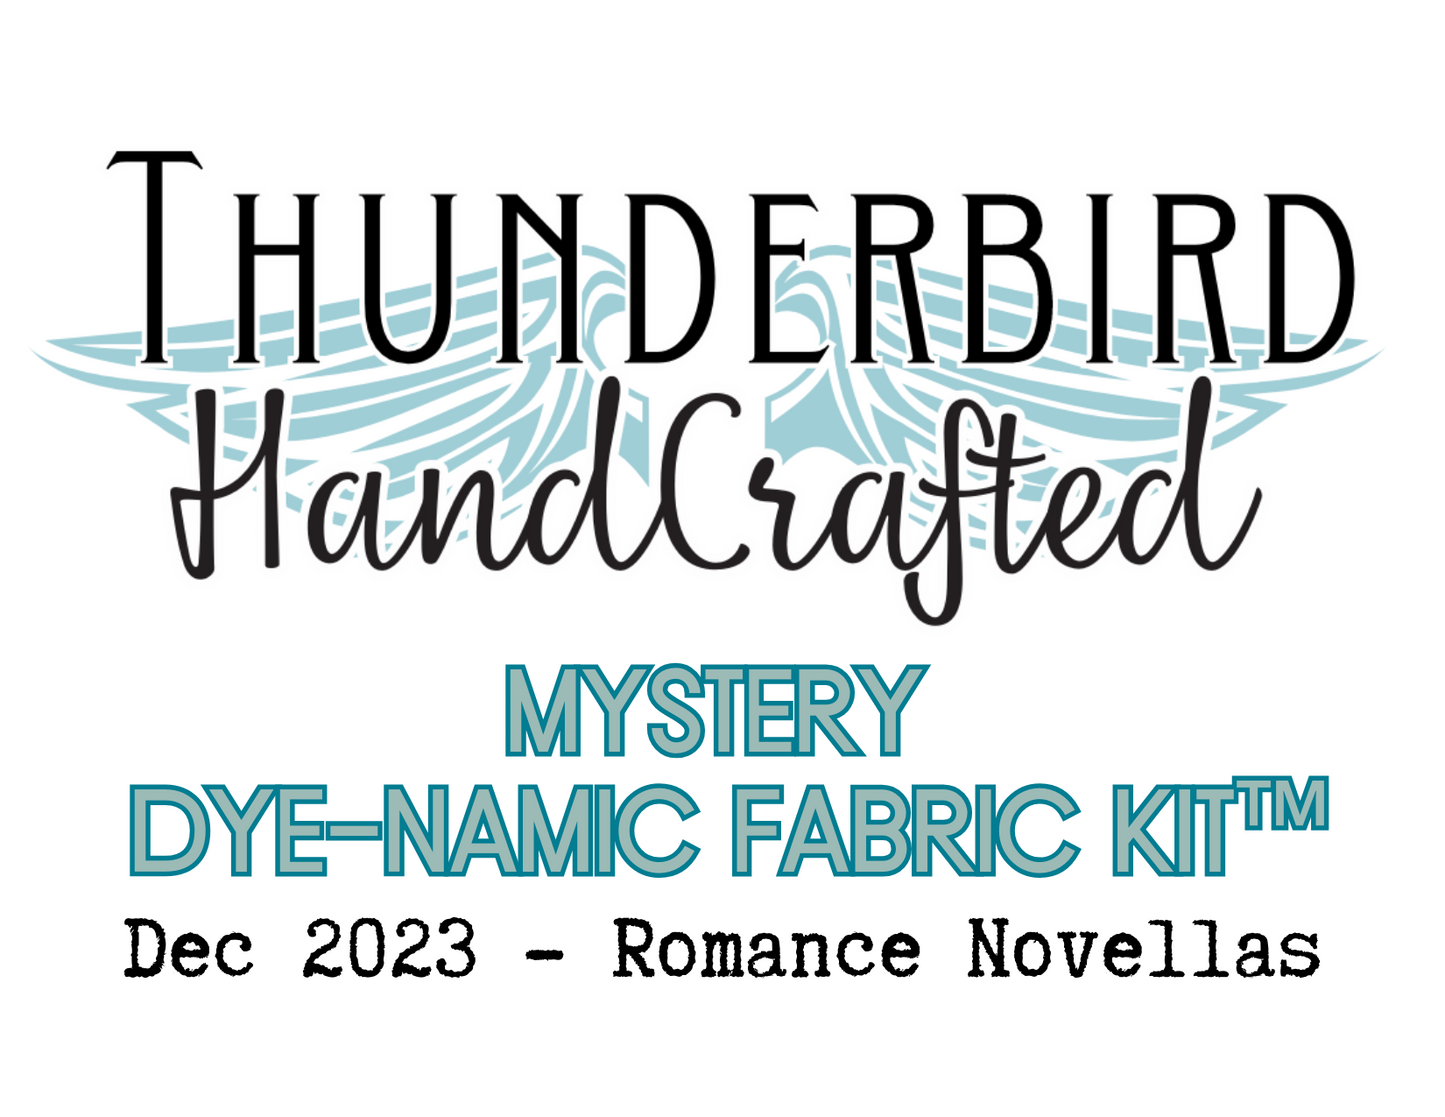 December 2023 Dye-Namic Fabric Kit™ - Romance Novellas